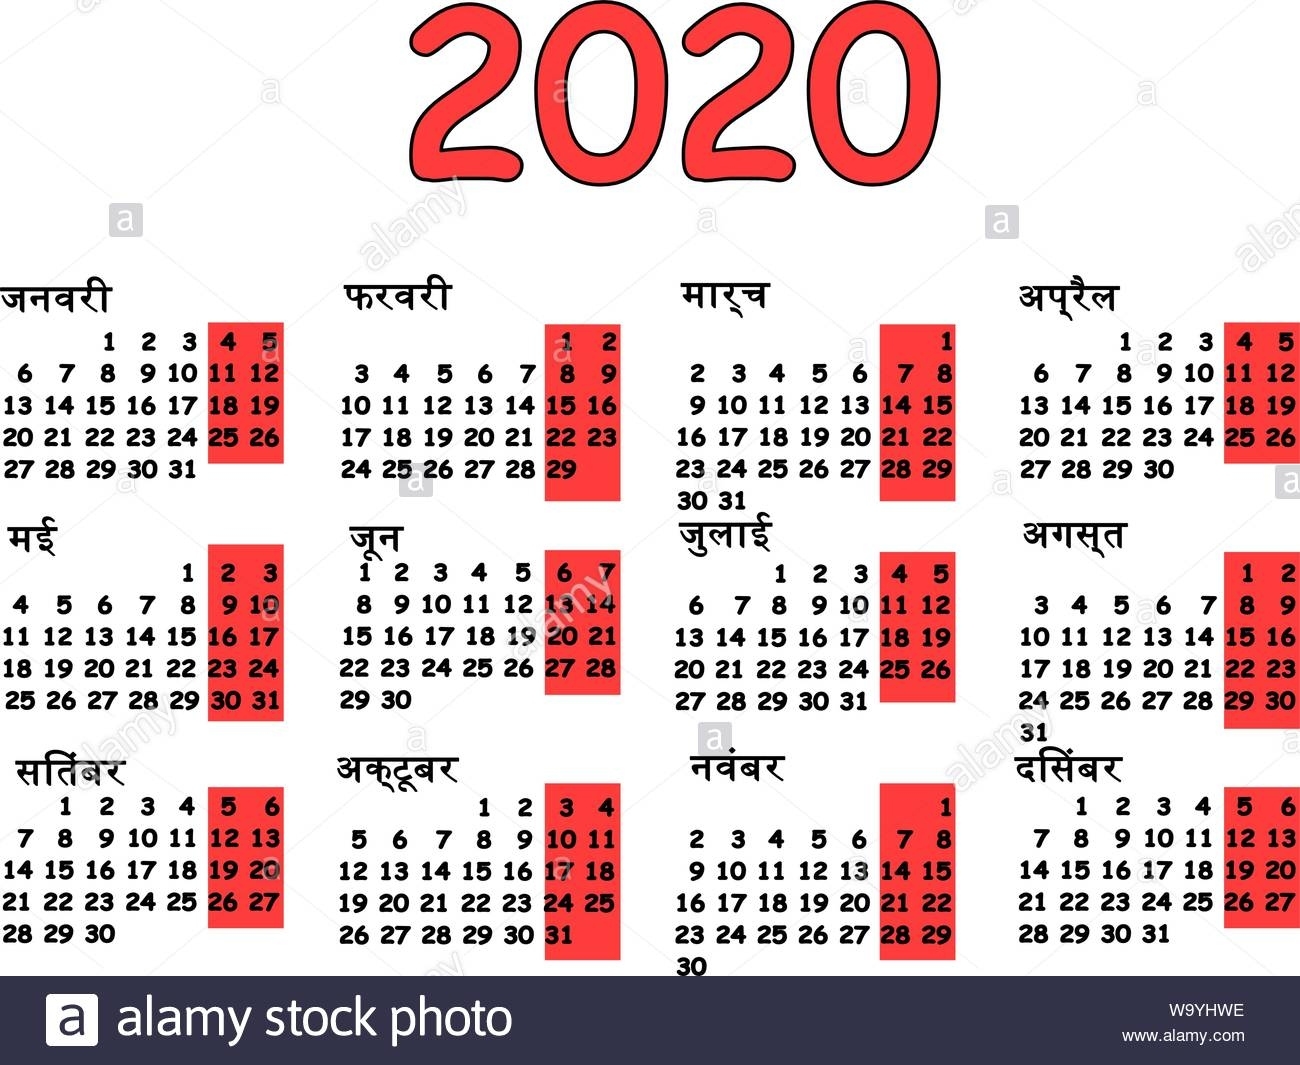 2020 Calendar Stock Vector Images - Alamy Perky 2020 Calendar In Hindi